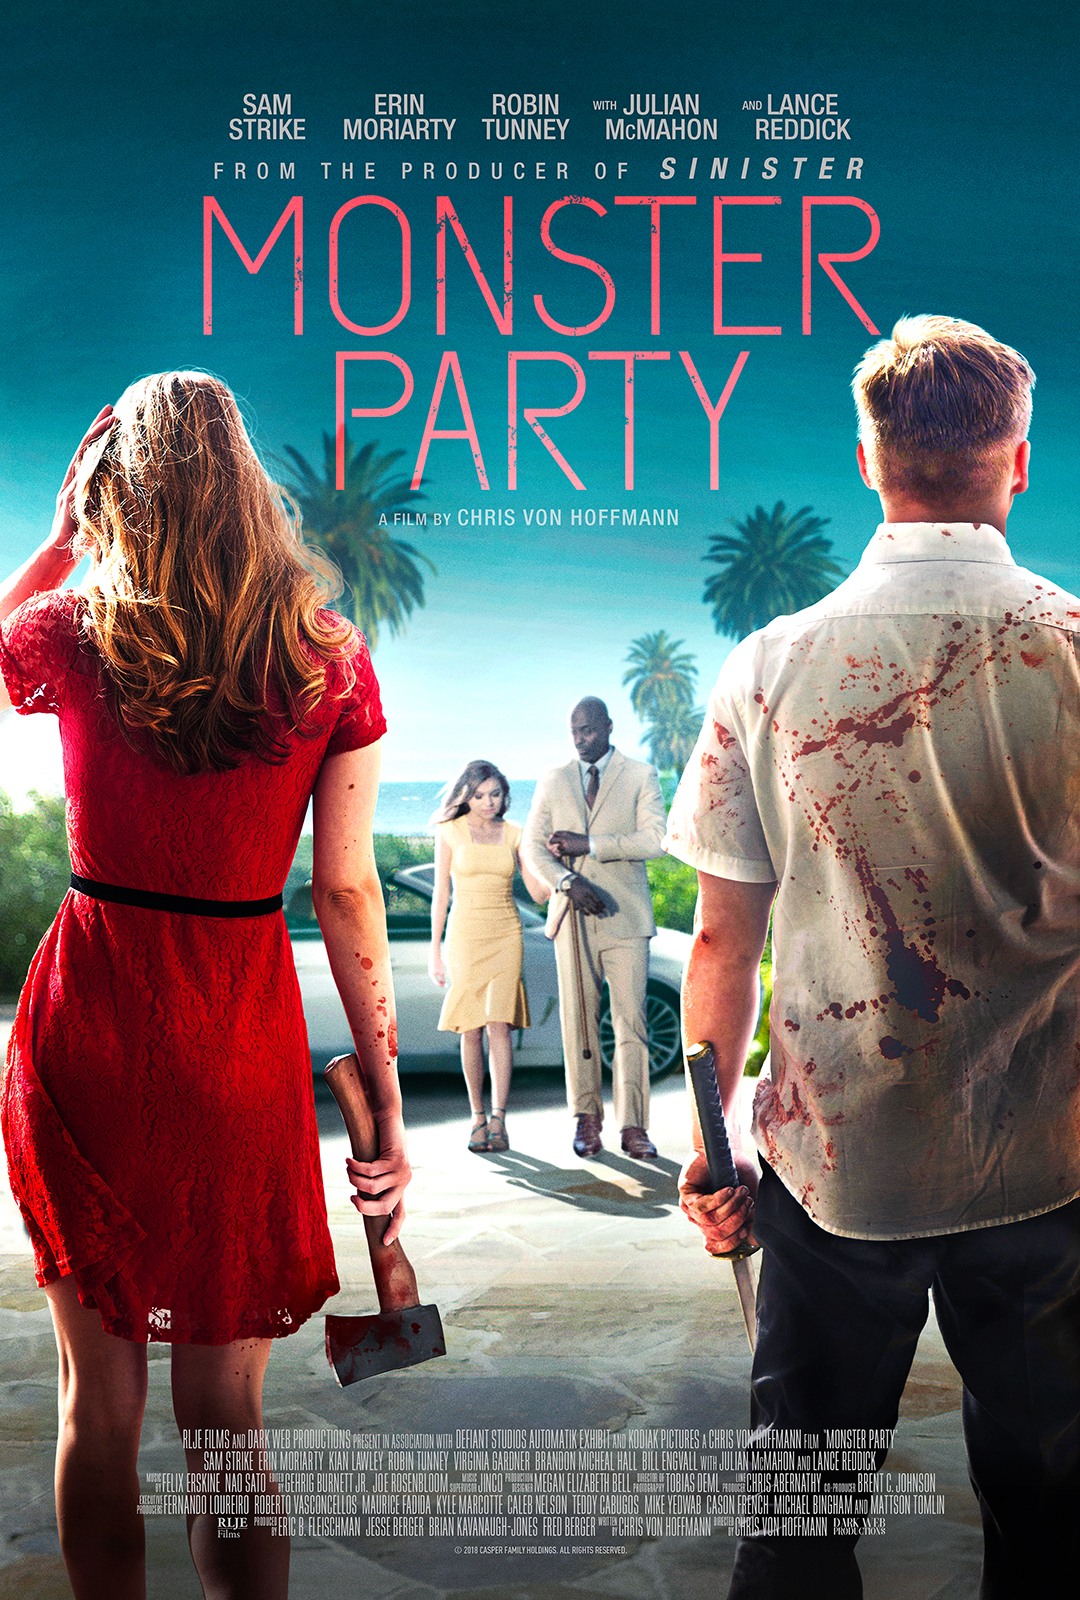 Nonton film Monster Party layarkaca21 indoxx1 ganool online streaming terbaru